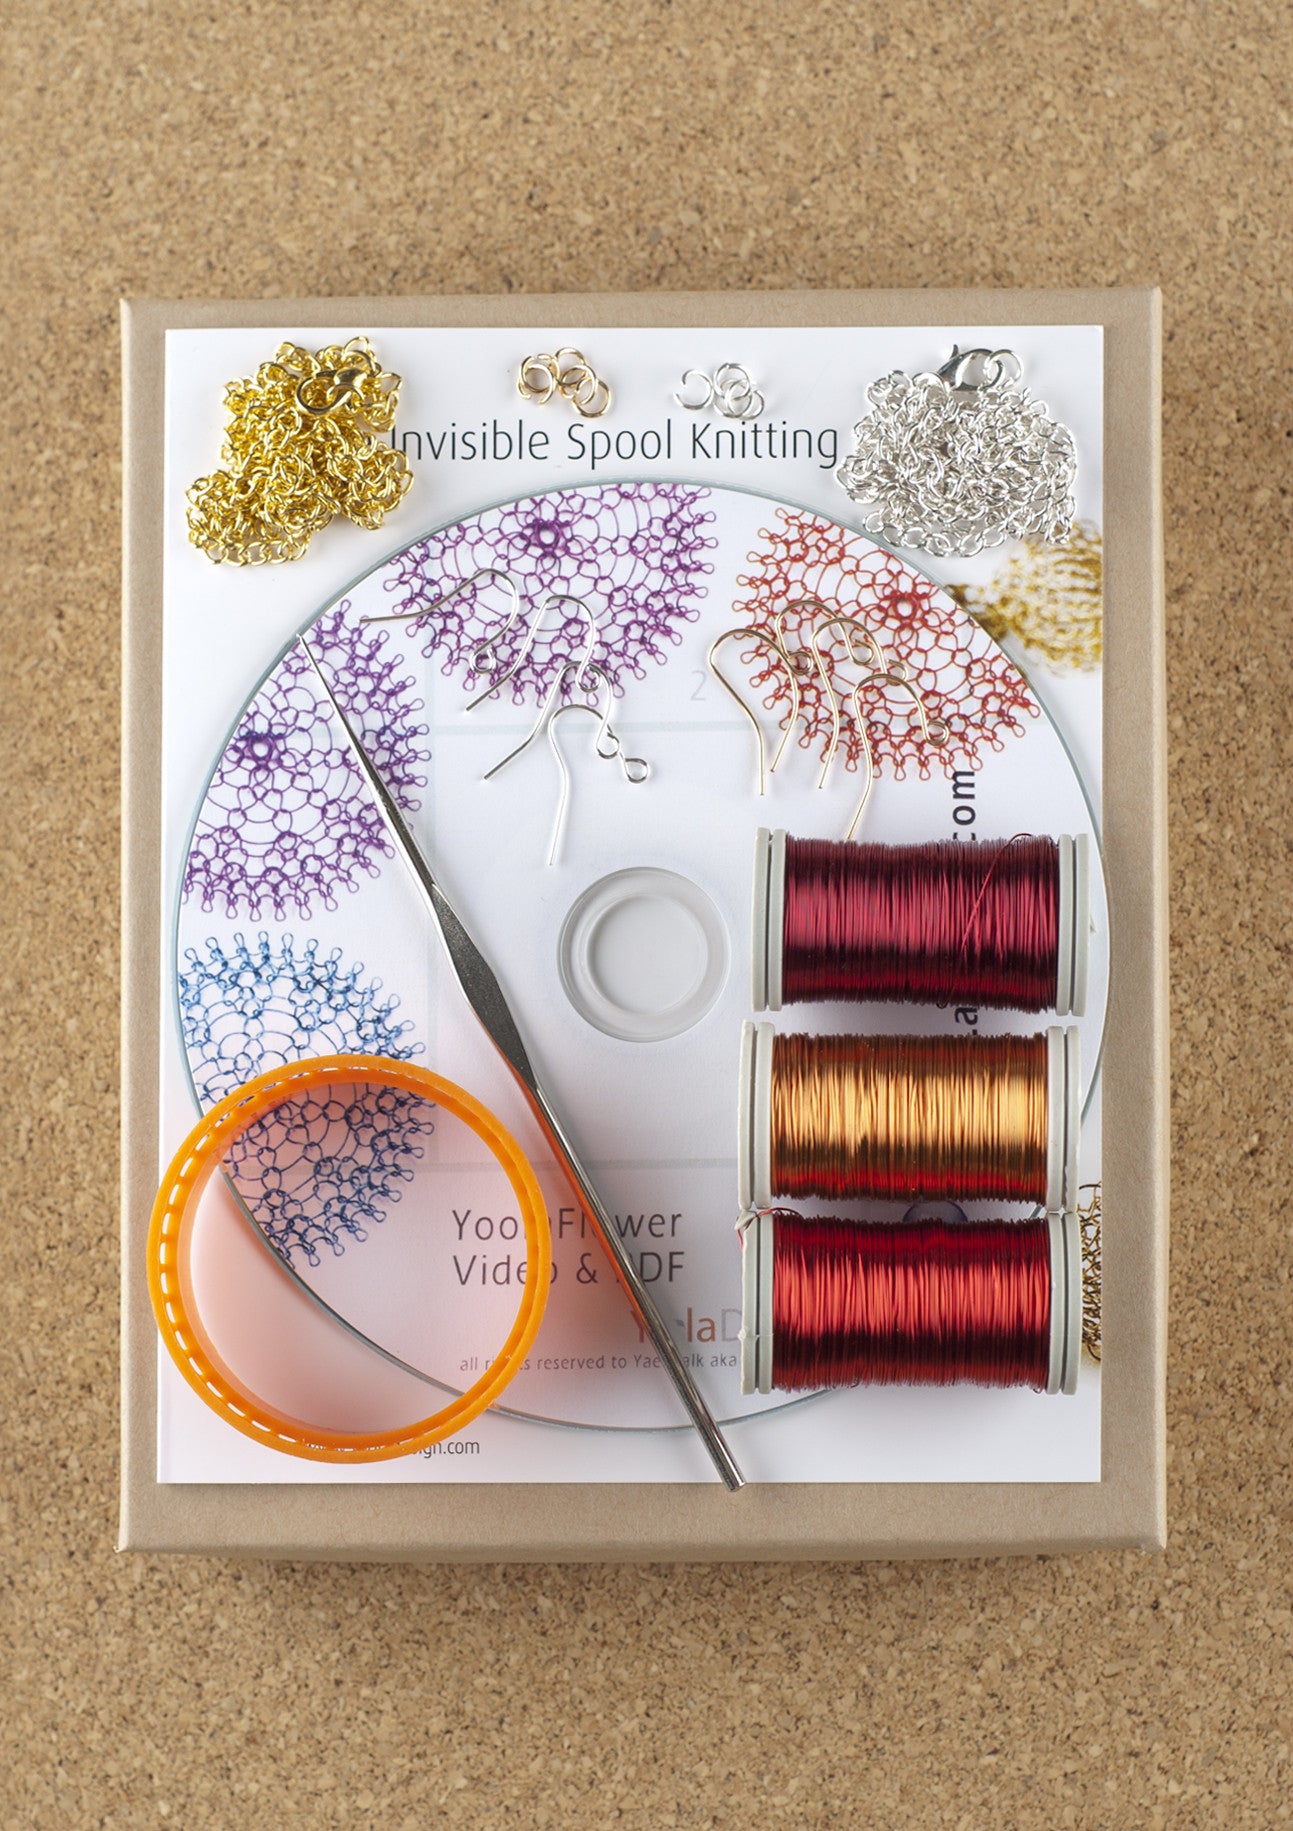 Yoola Sunflower Kit , wire crochet , DIY kit , video tutorial